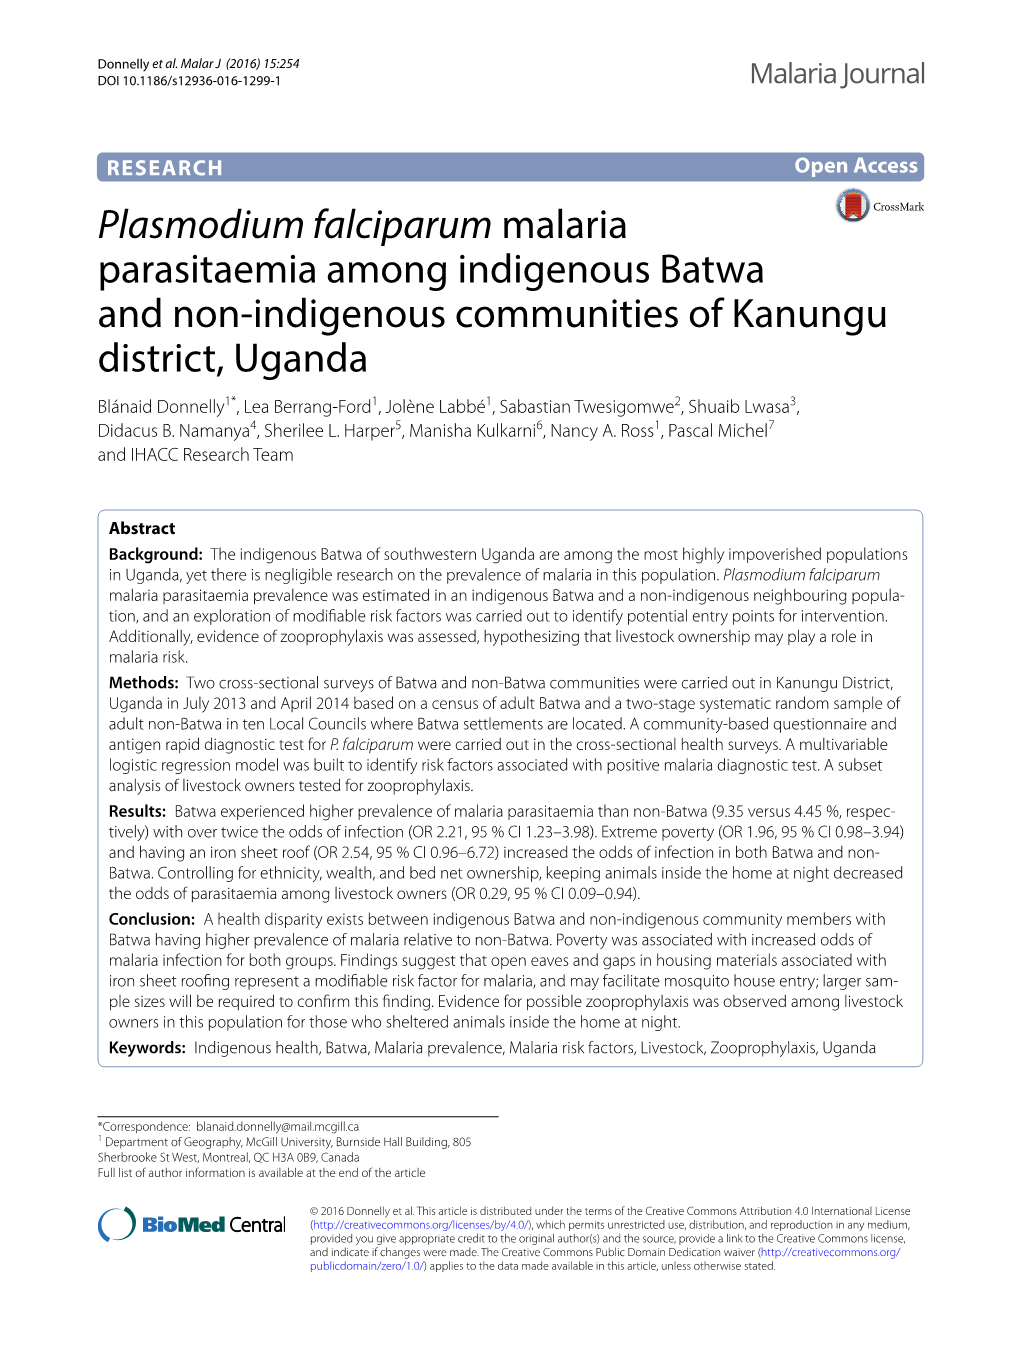 Plasmodium Falciparum Malaria Parasitaemia Among Indigenous